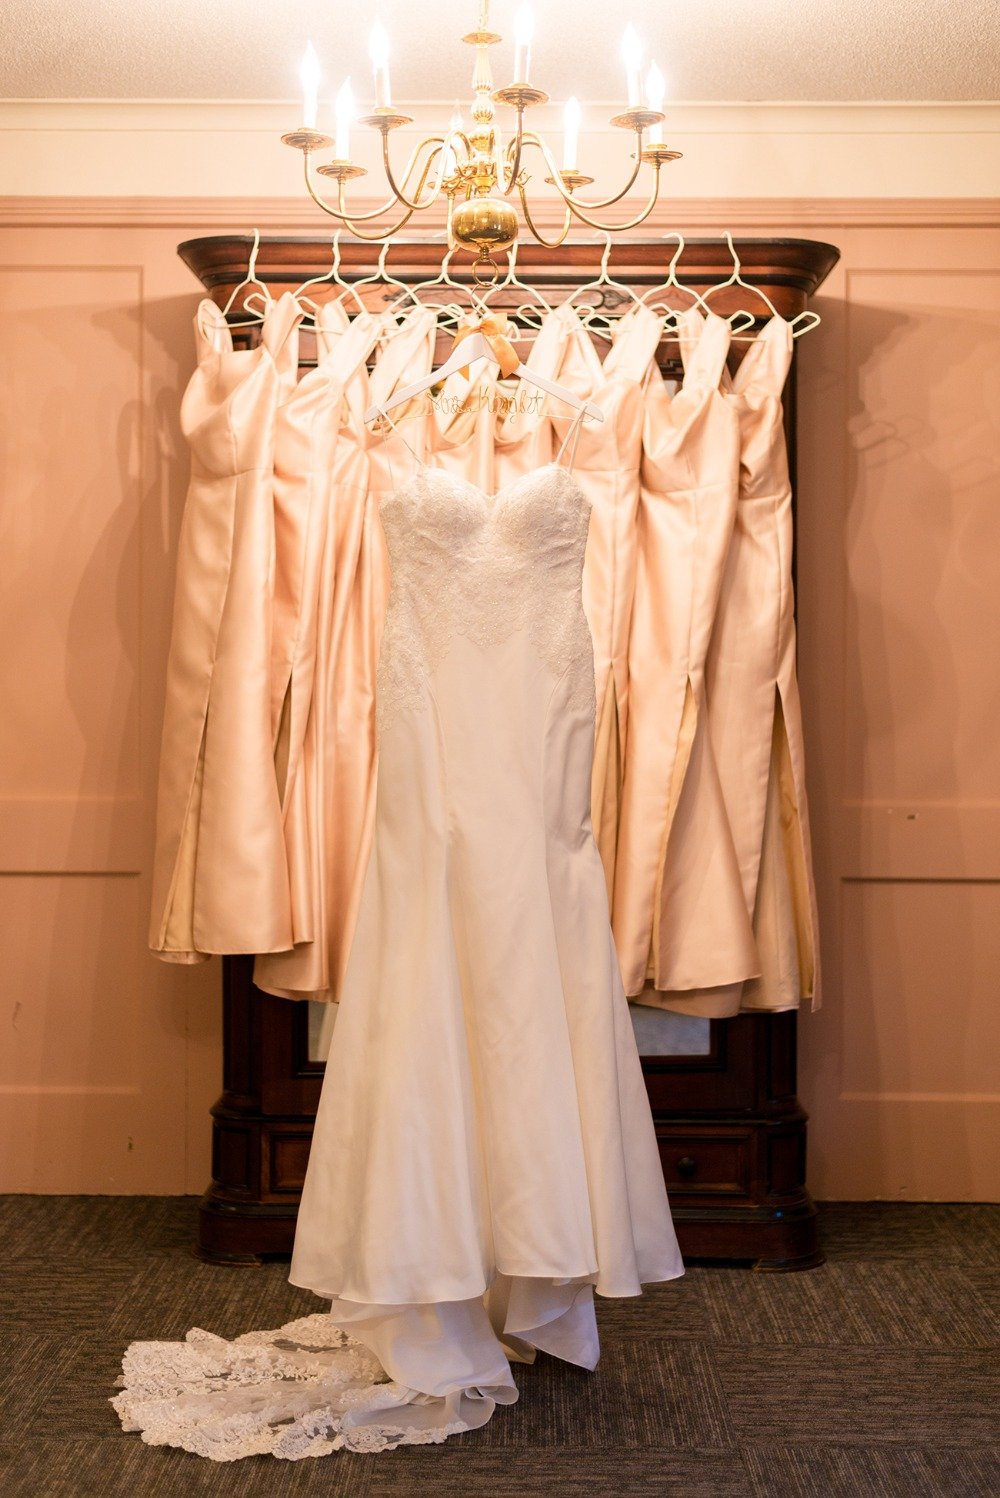 wedding dress and bridesmaid dresses